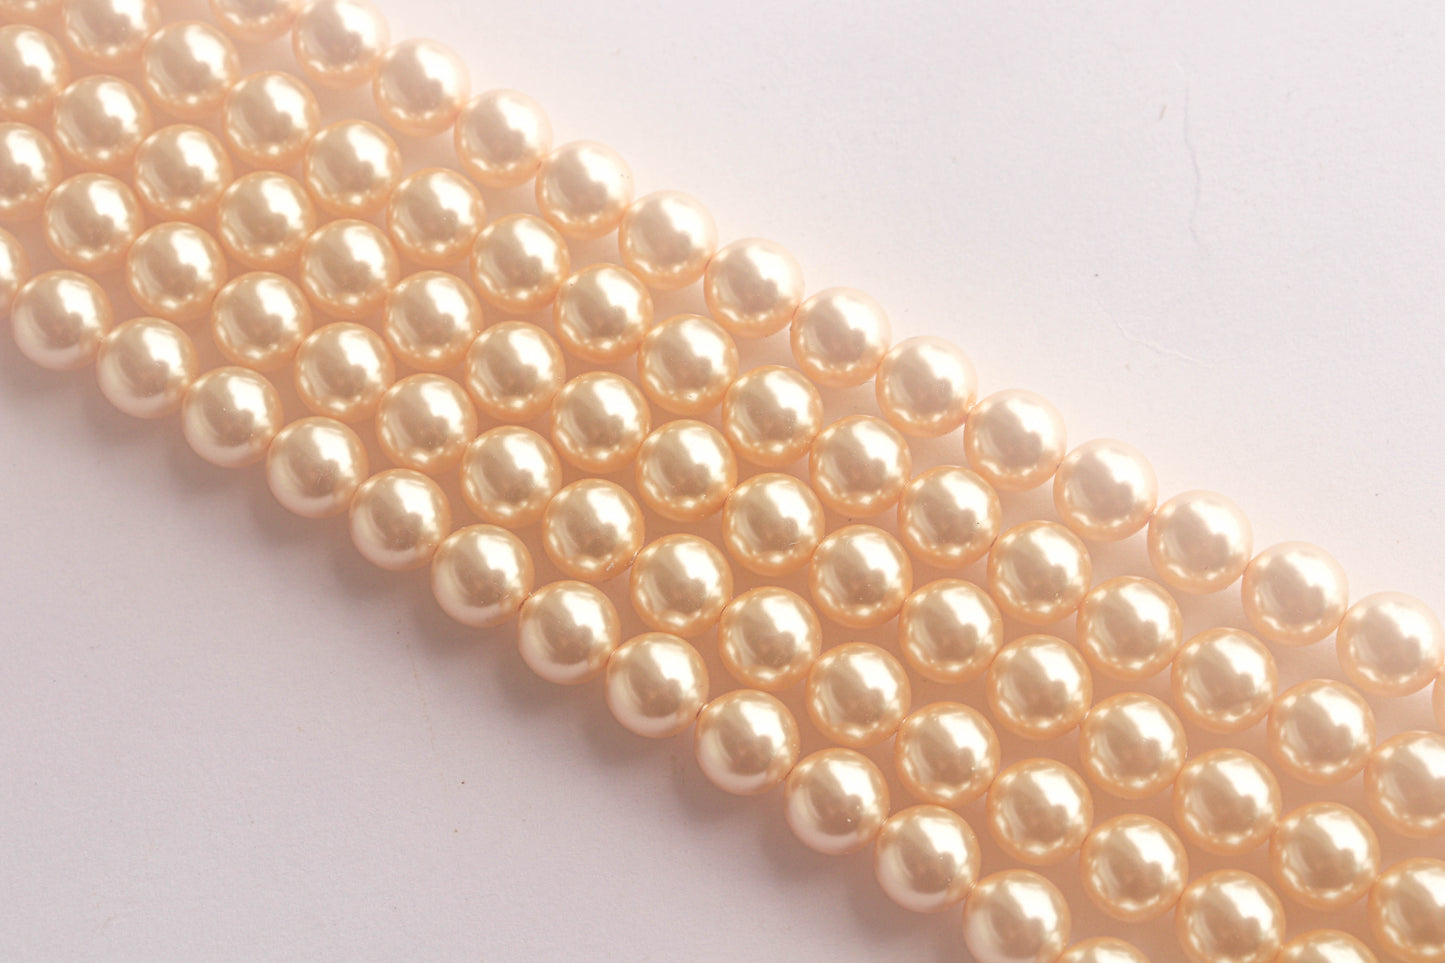 6mm Crystal Light Gold (001 539) Genuine Swarovski 5810 Pearls Round Beads Beadsforyourjewelry